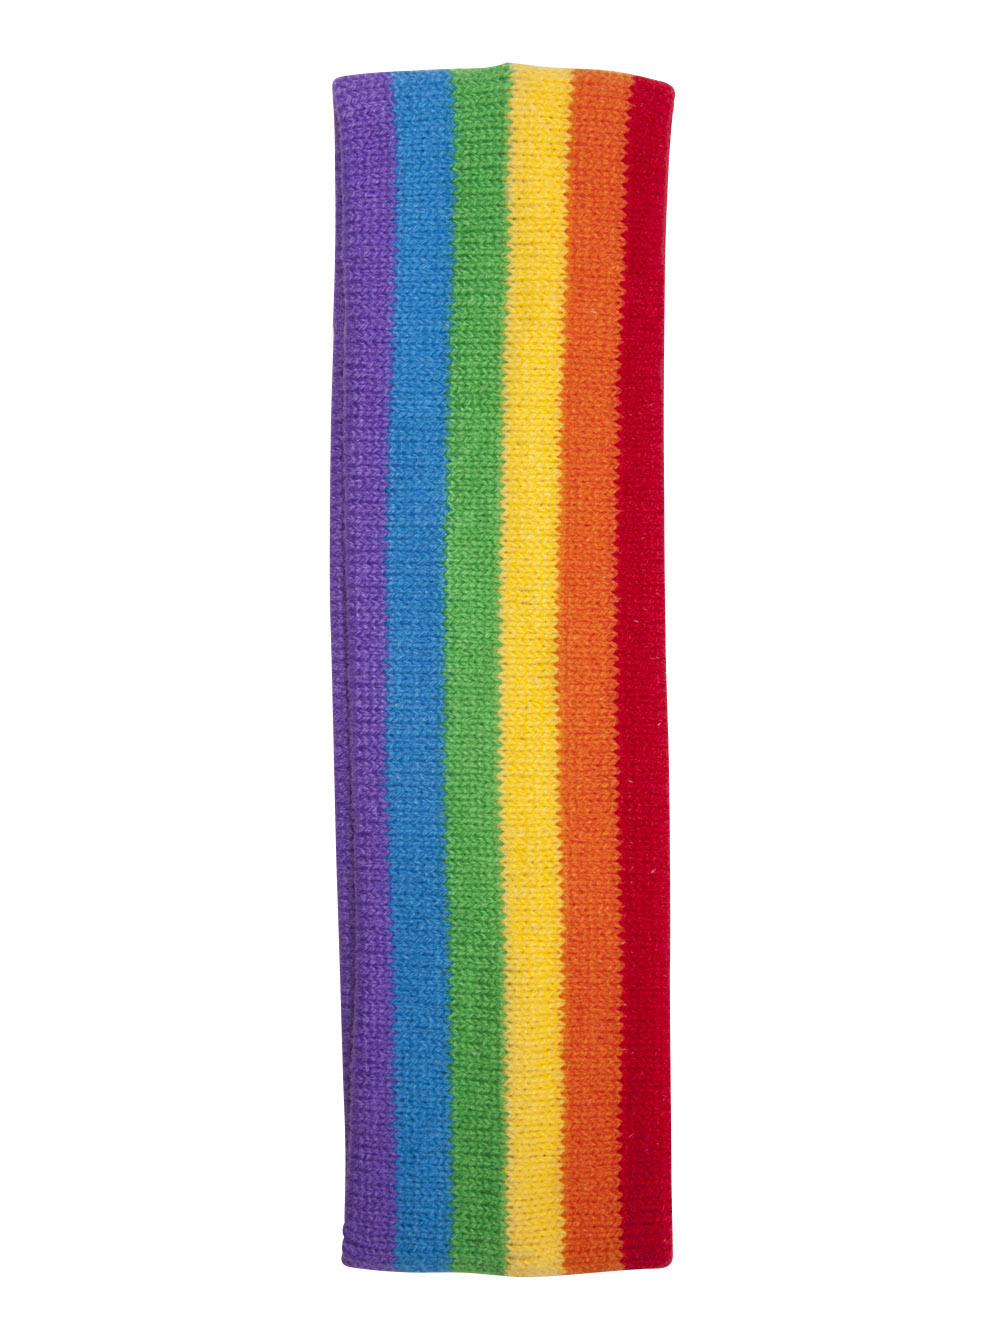 Equality Pride Kit - Headband + Wristbands - image 3 of 4